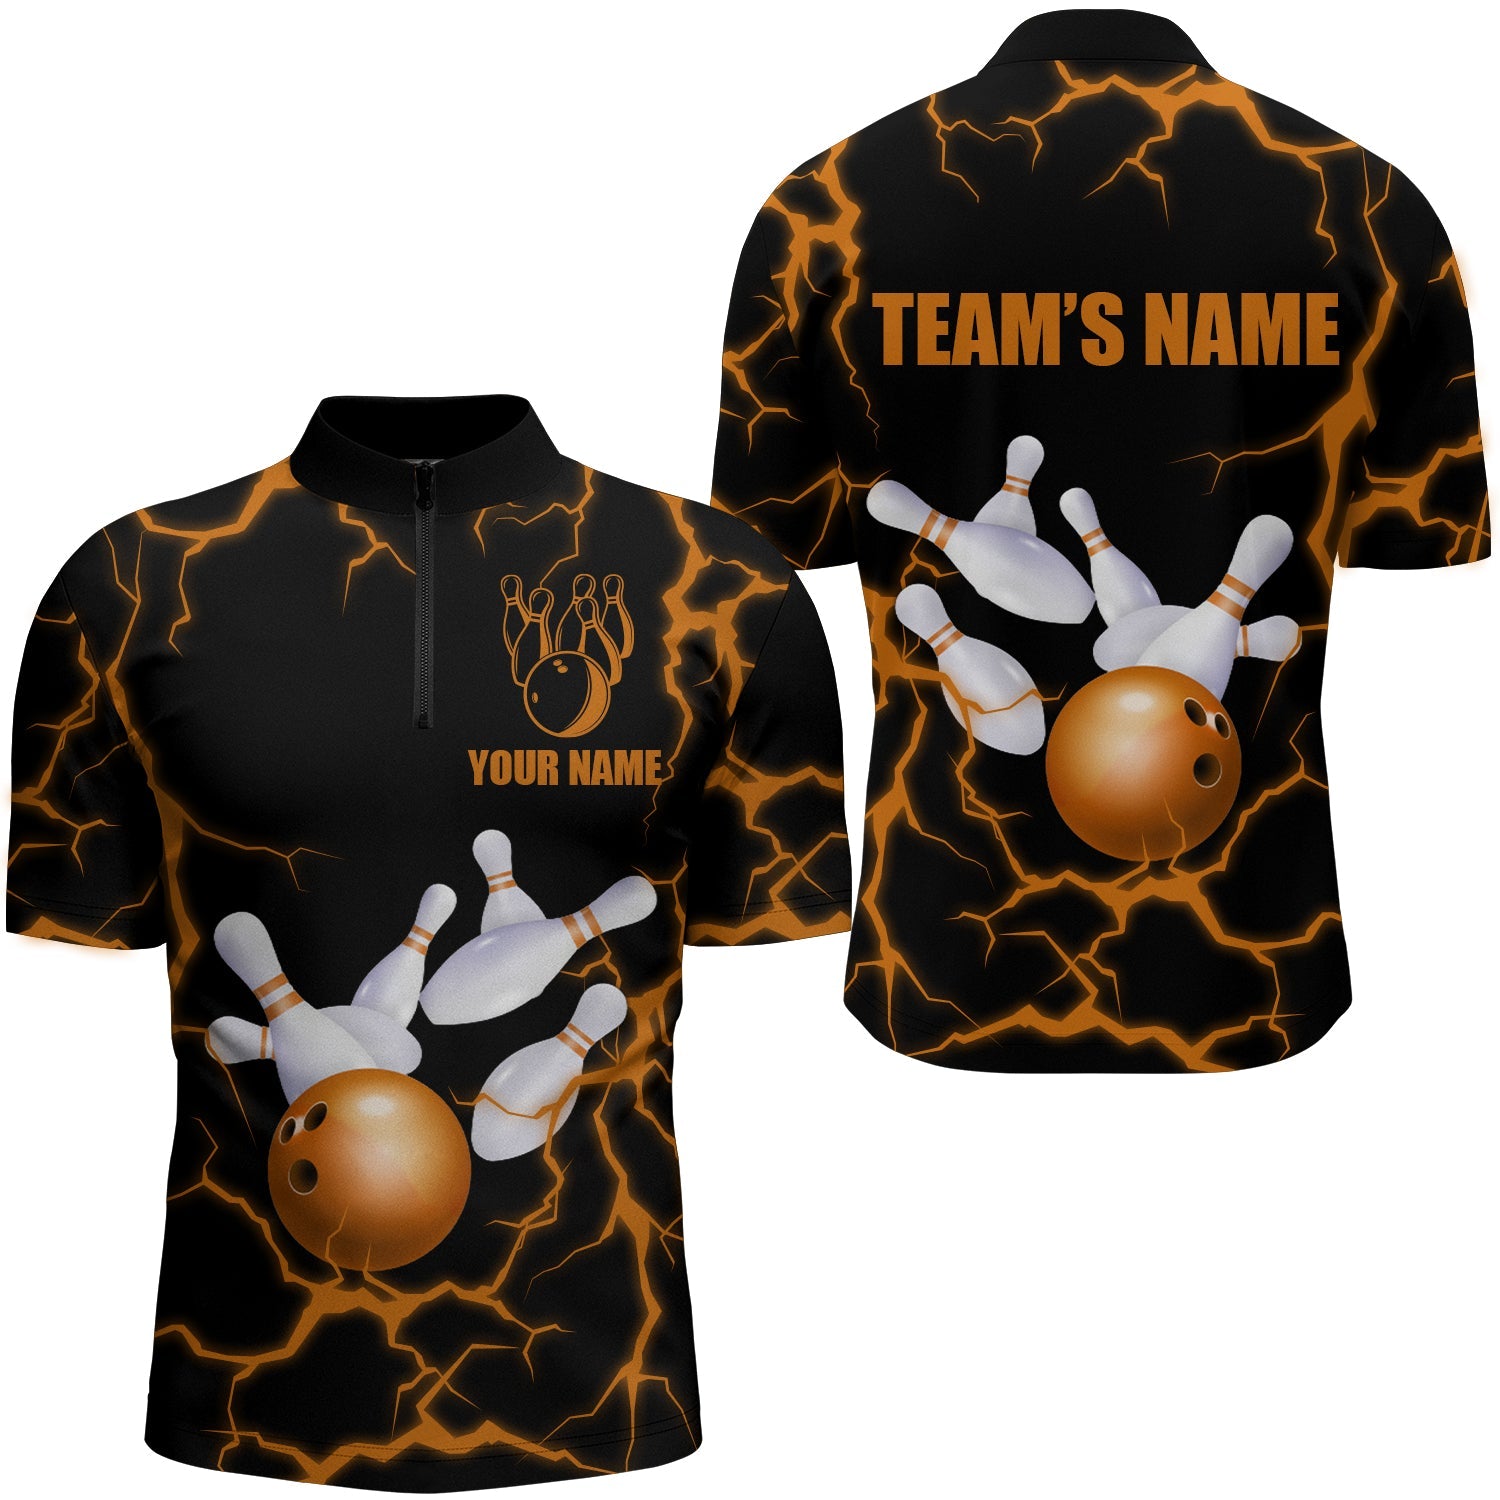 Bowling Customized Jersey Black Shirt, Orange Thunder Lightning Bowling Quarter Zip Shirt For Bowlers, Bowling Team